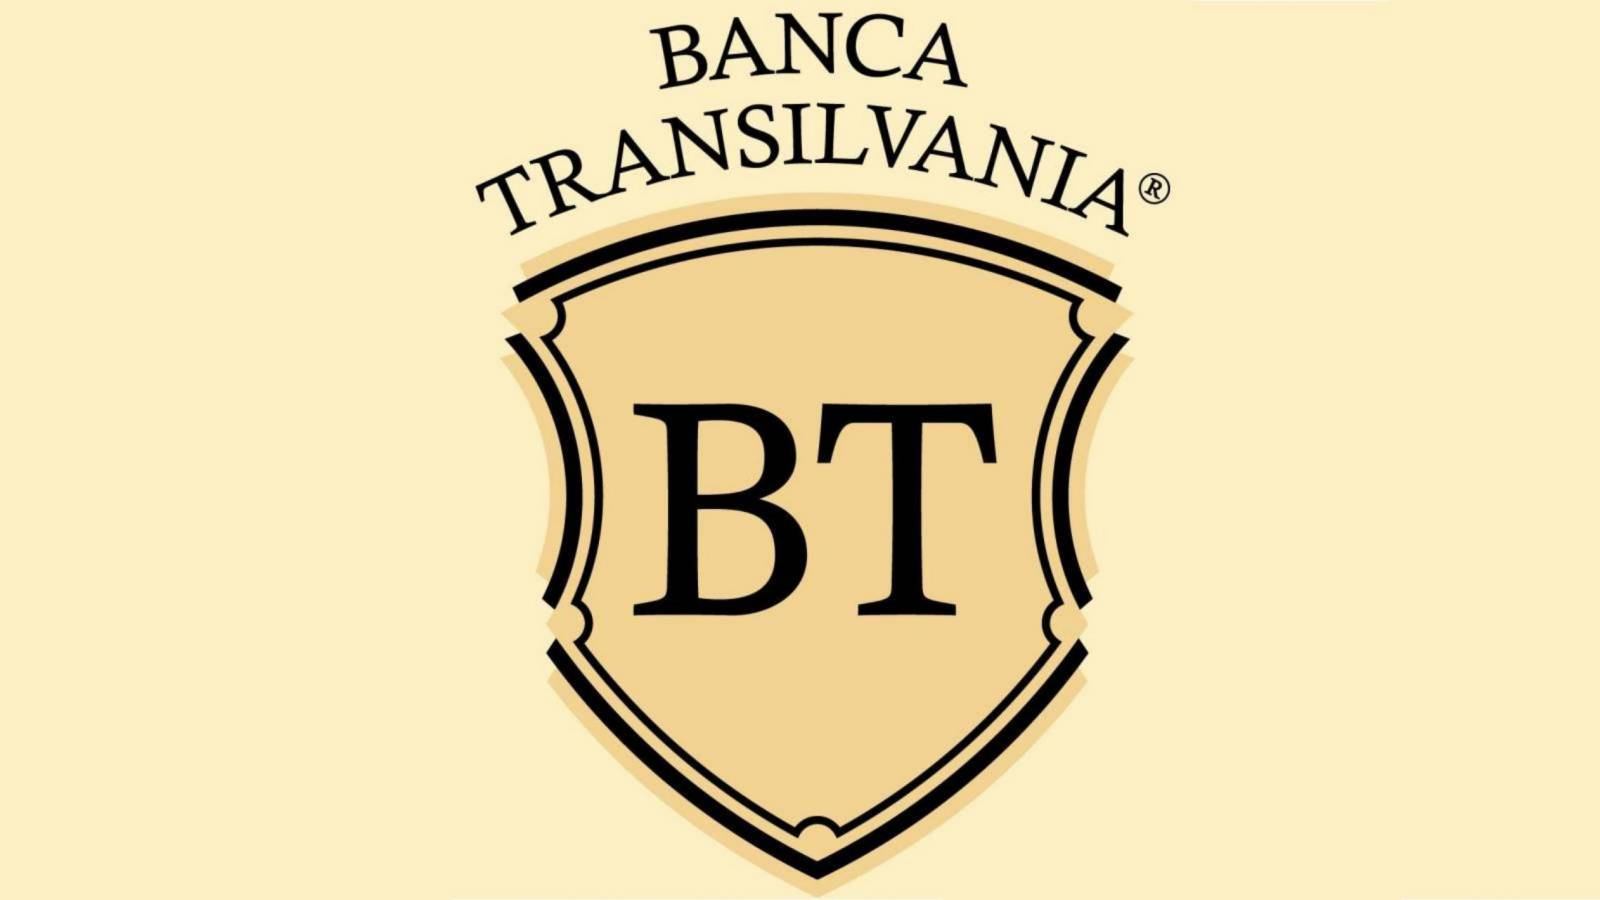 BANCA Transilvania health